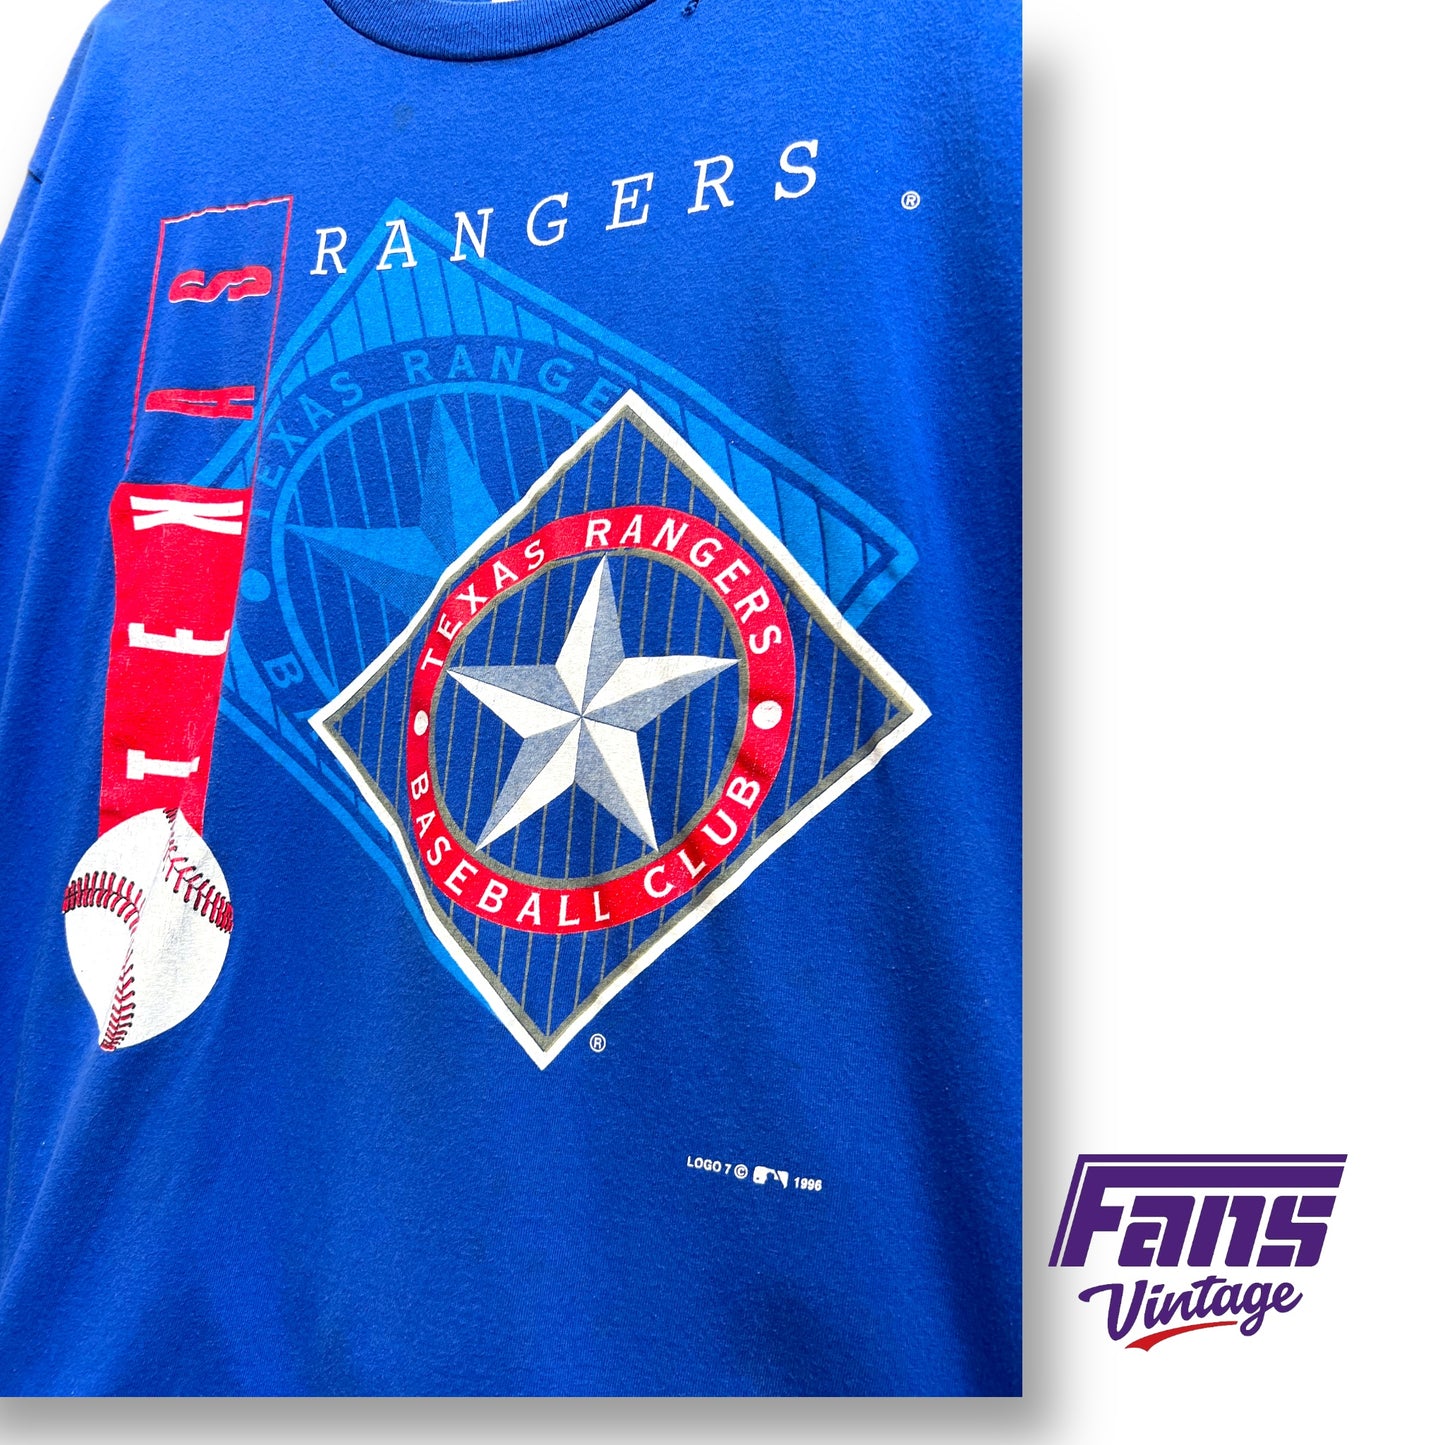 90s Vintage Texas Rangers Tee - awesome distressed look!